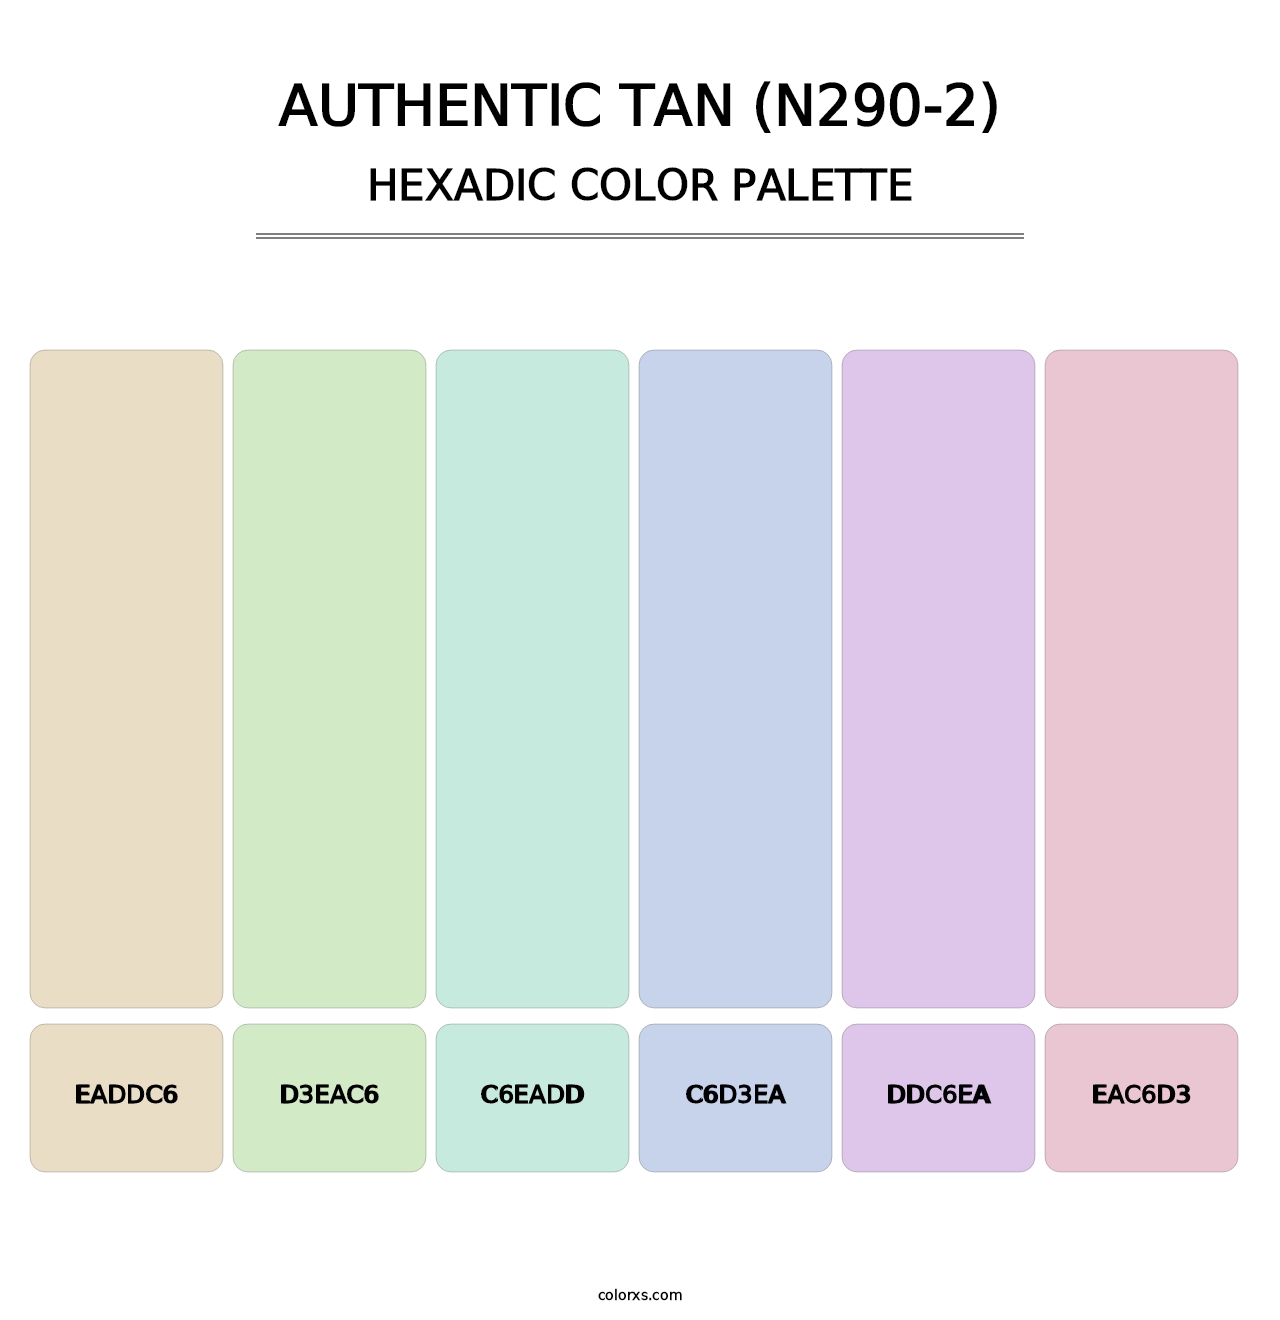 Authentic Tan (N290-2) - Hexadic Color Palette